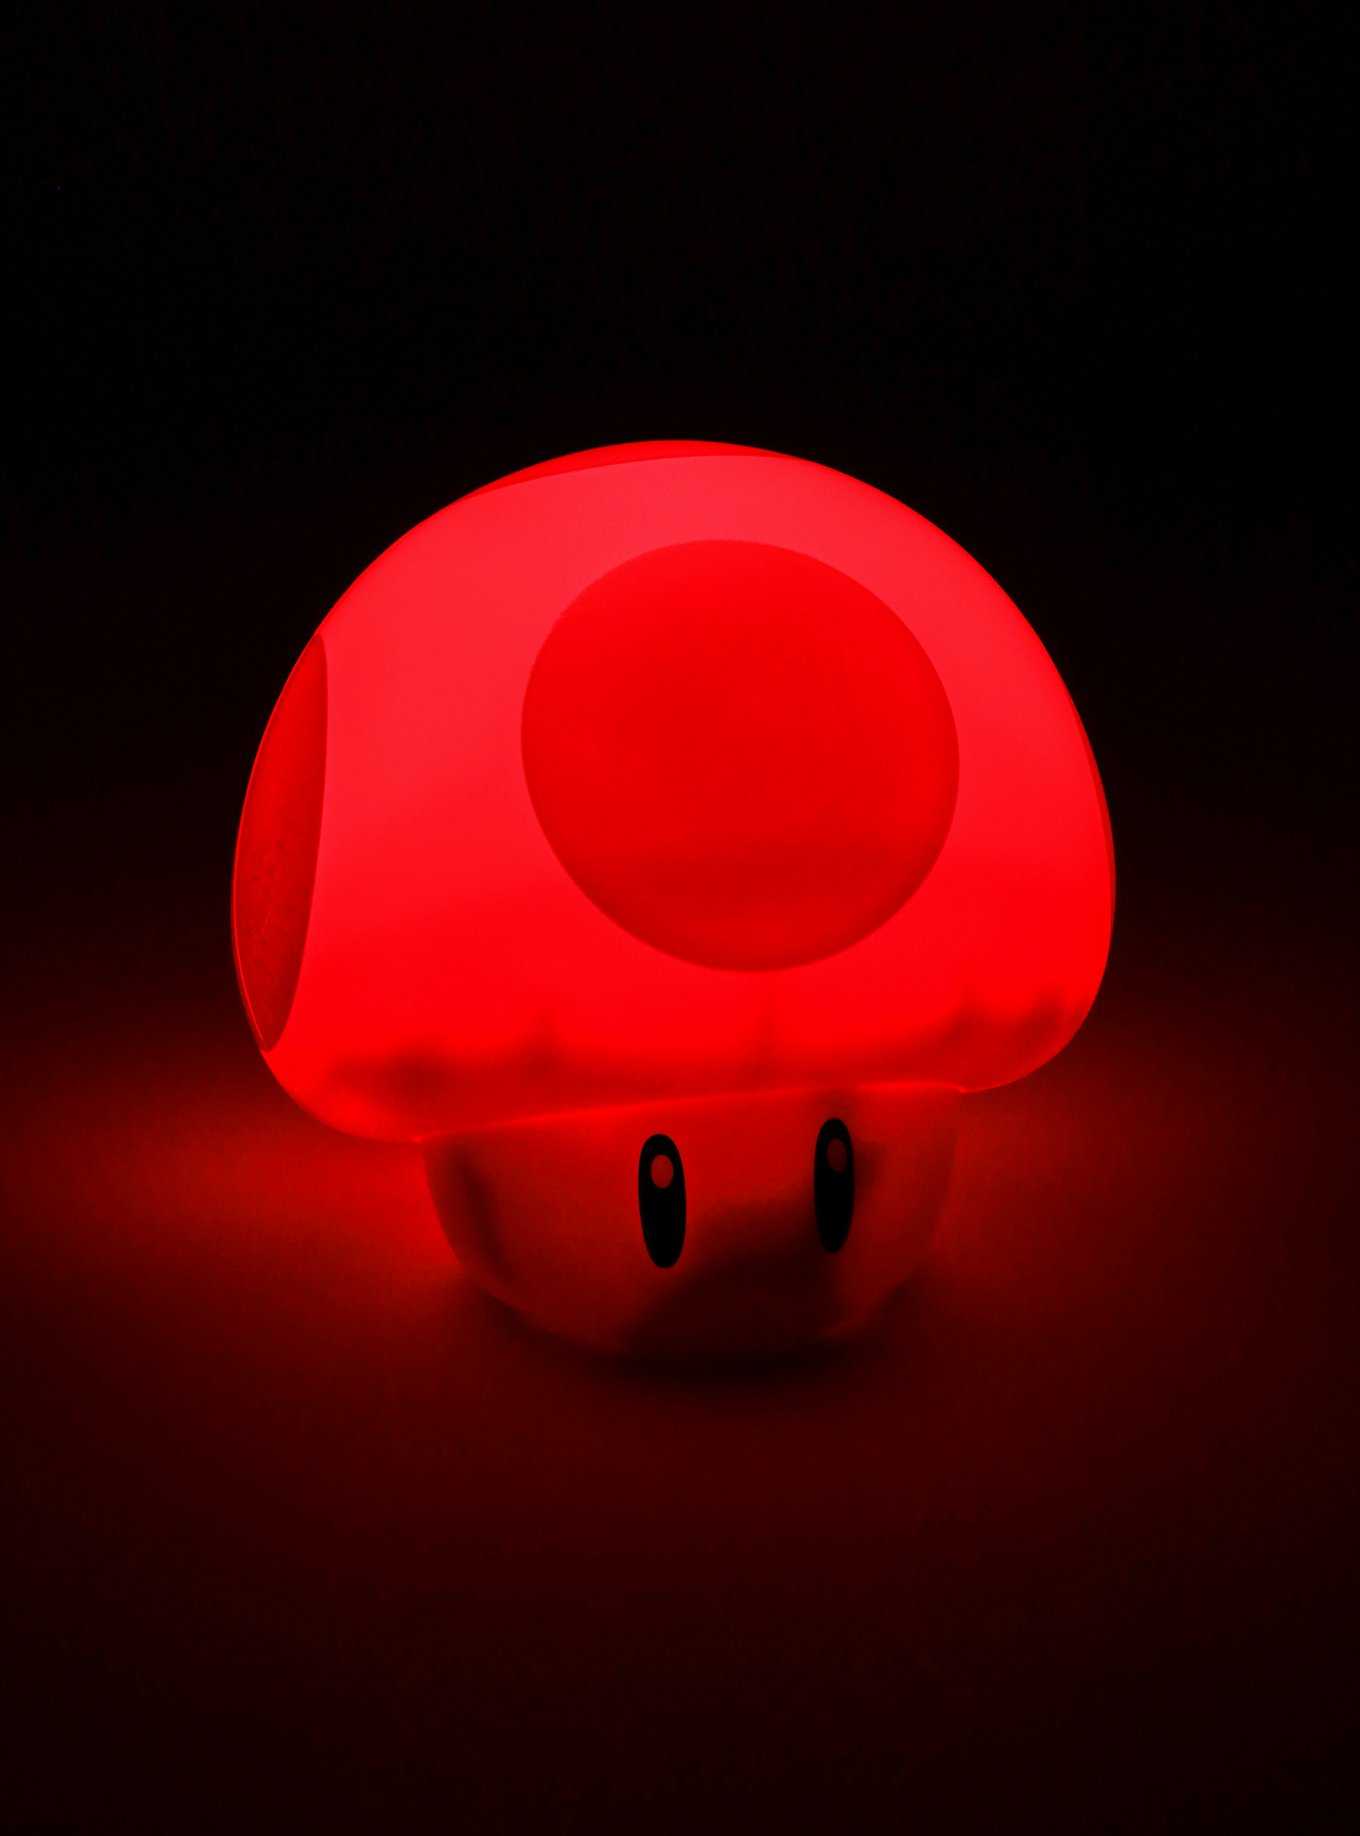 Nintendo Mario Kart Mushroom Figural Mood Light, , hi-res